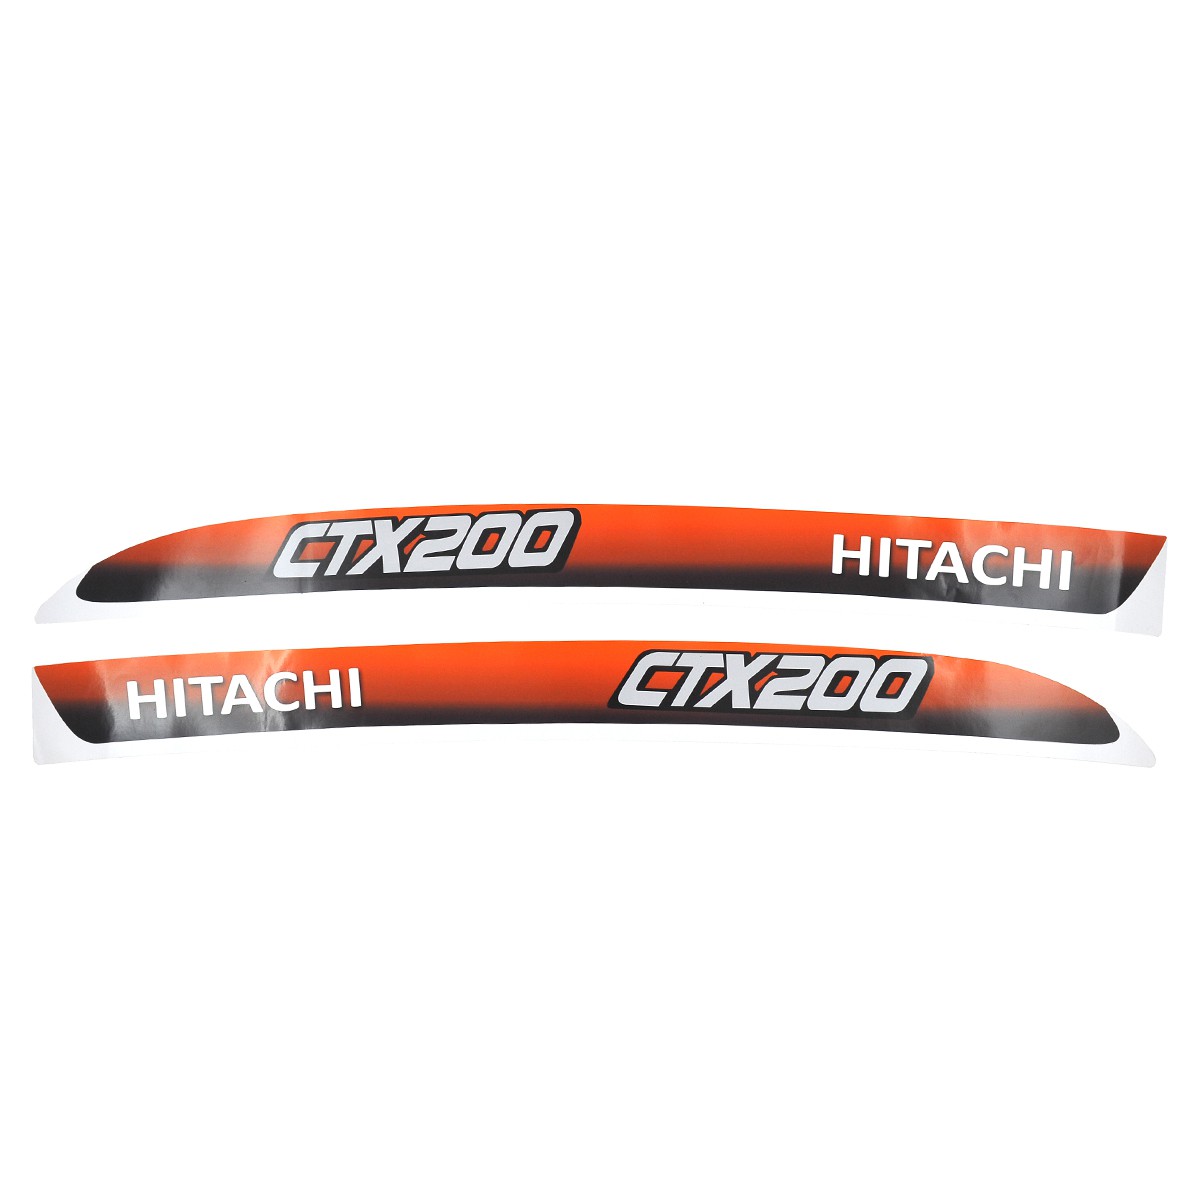 Hitachi CTX200 stickers